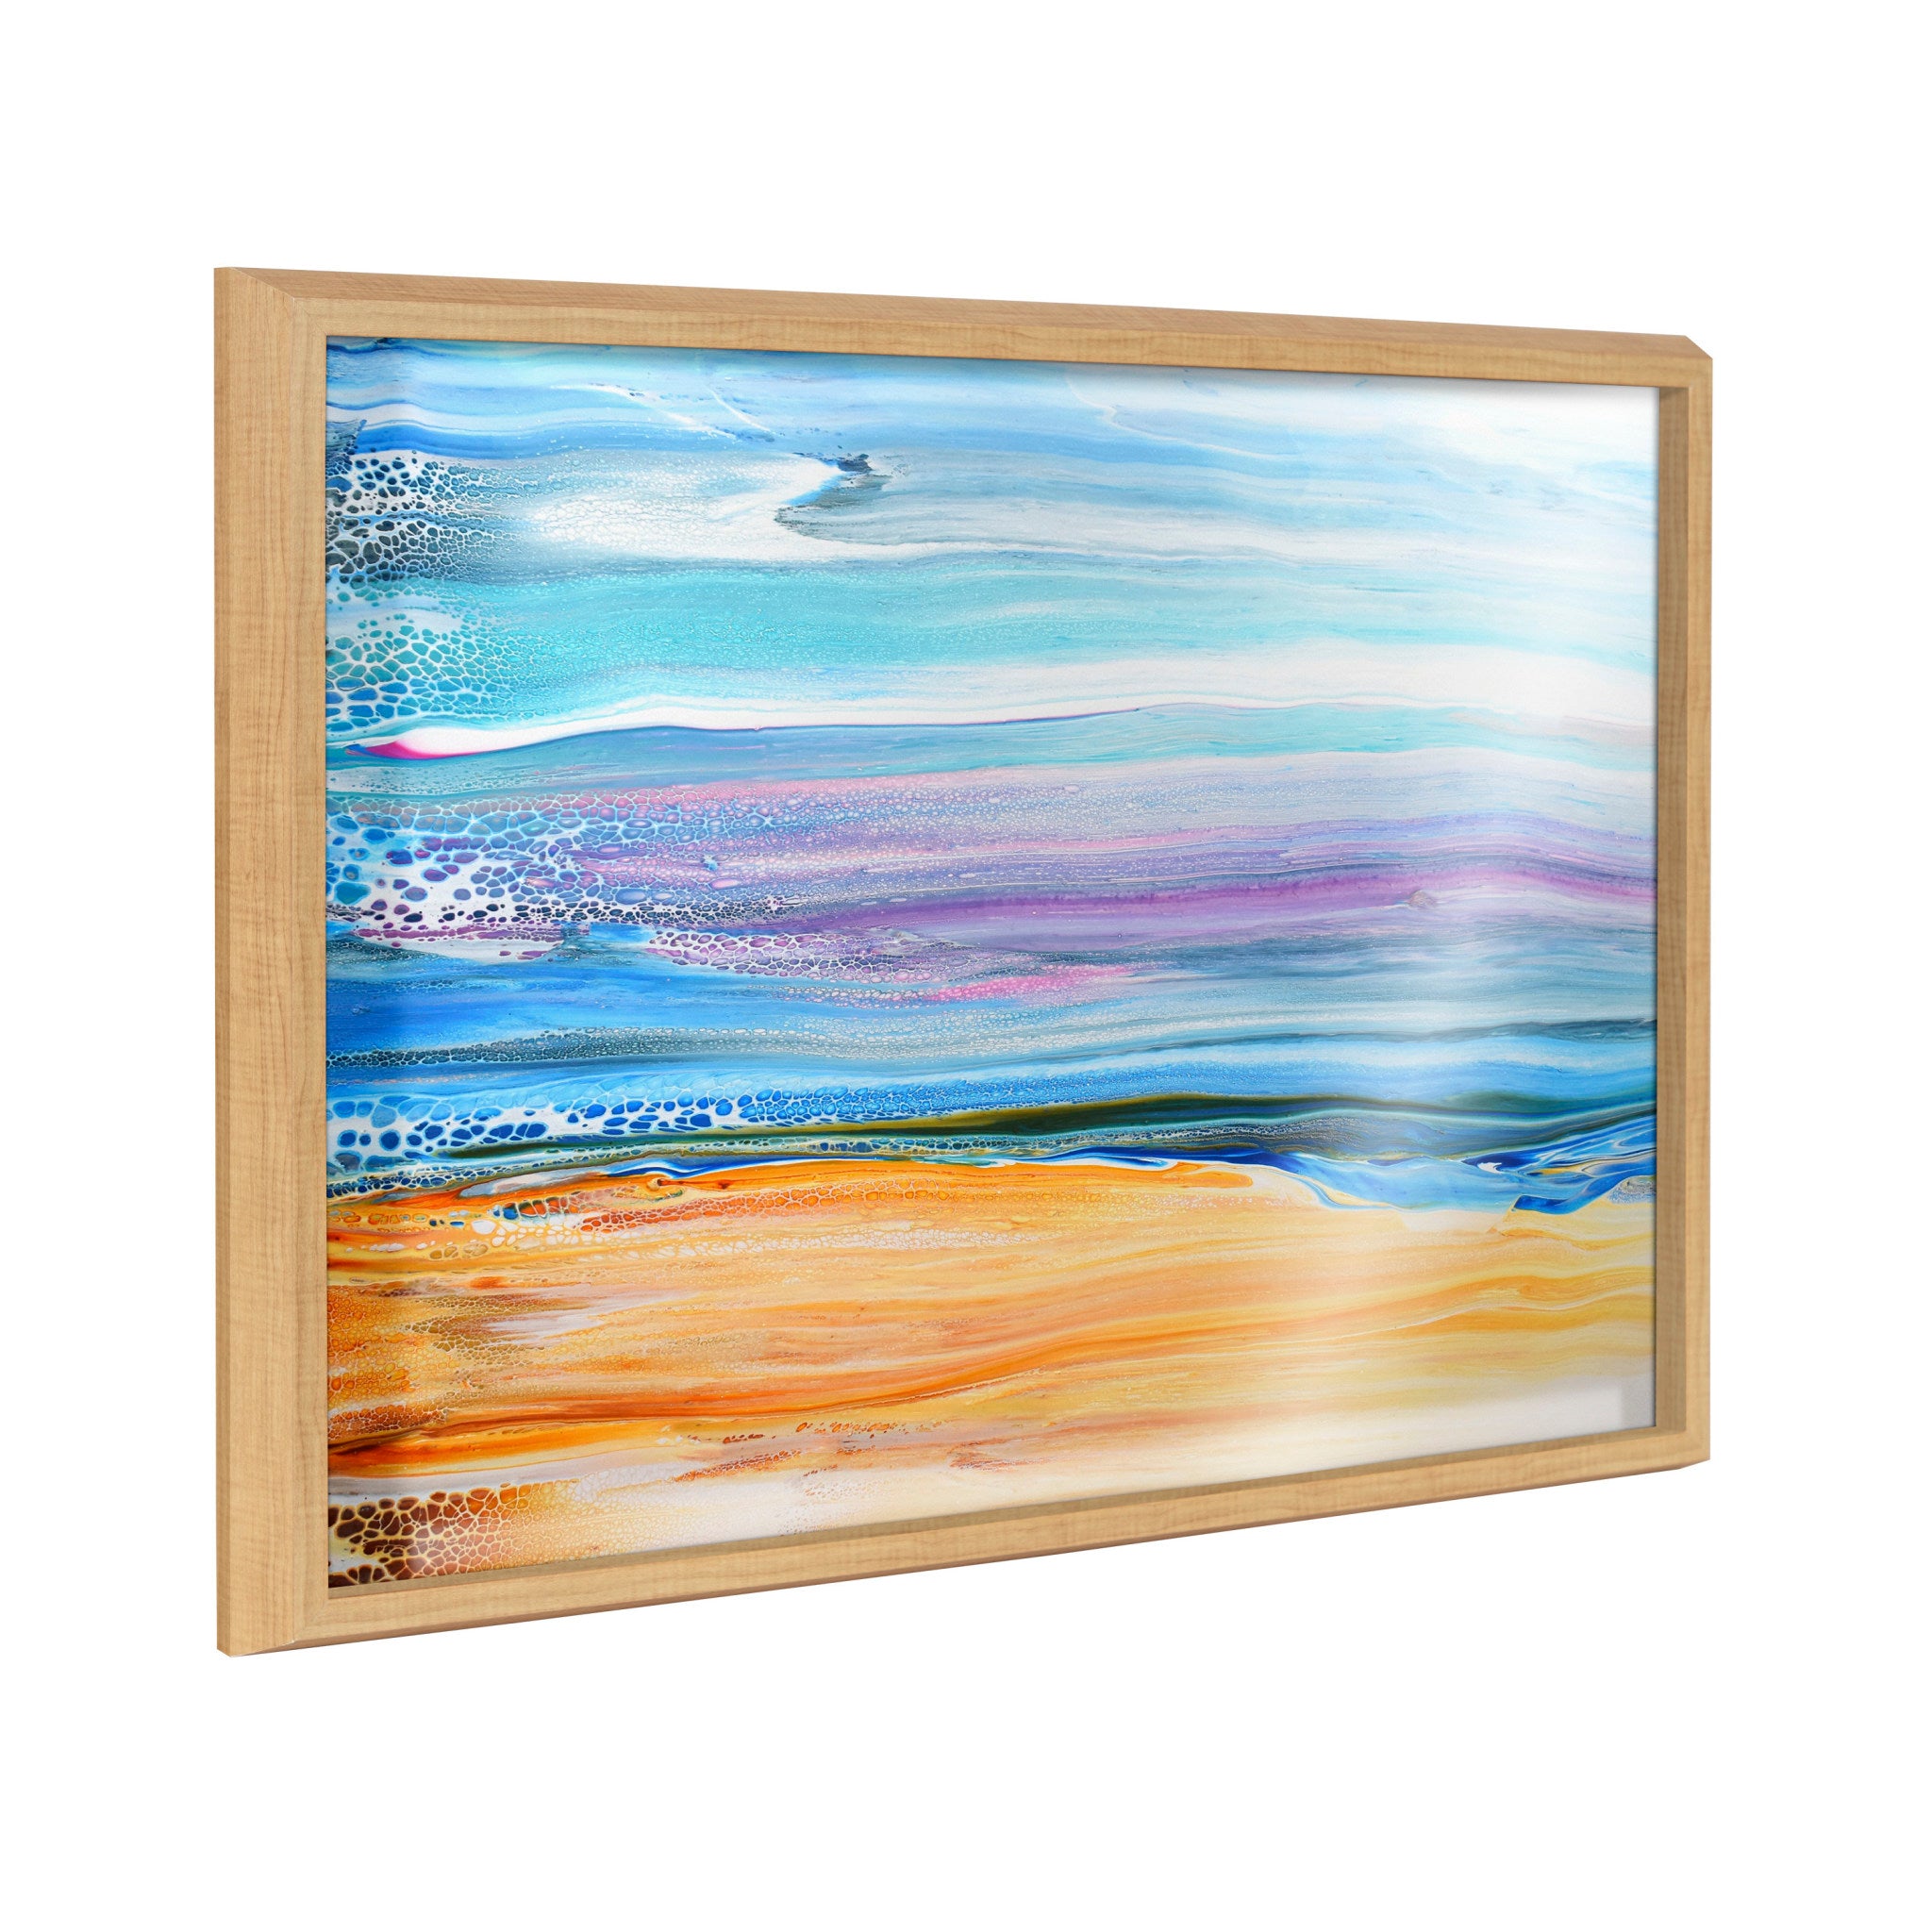 Blake Sand and Surf Framed Printed Art by Xizhou Xie